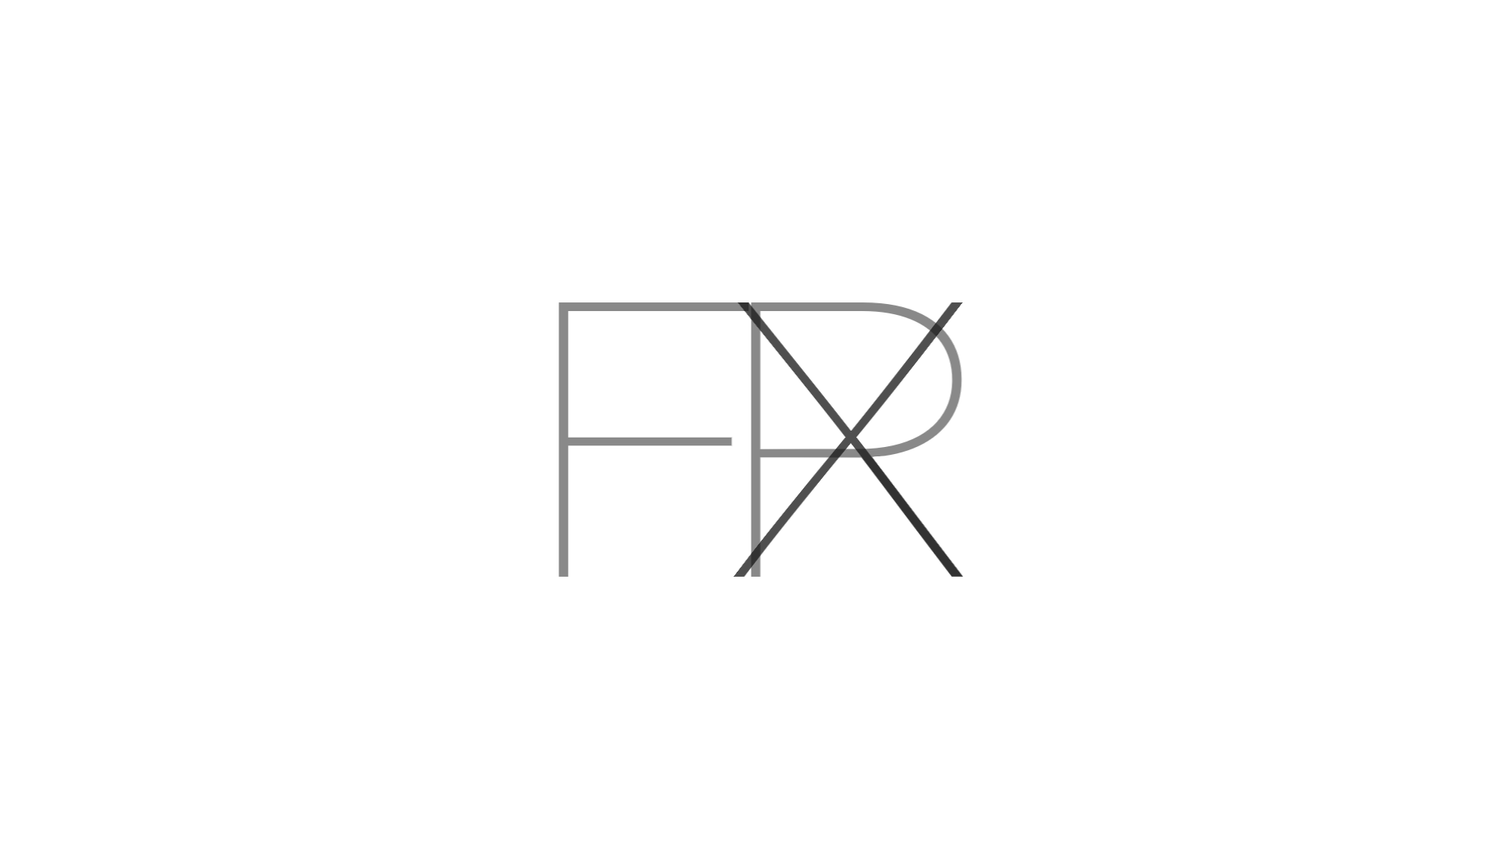 FloRojaVFX, LLC